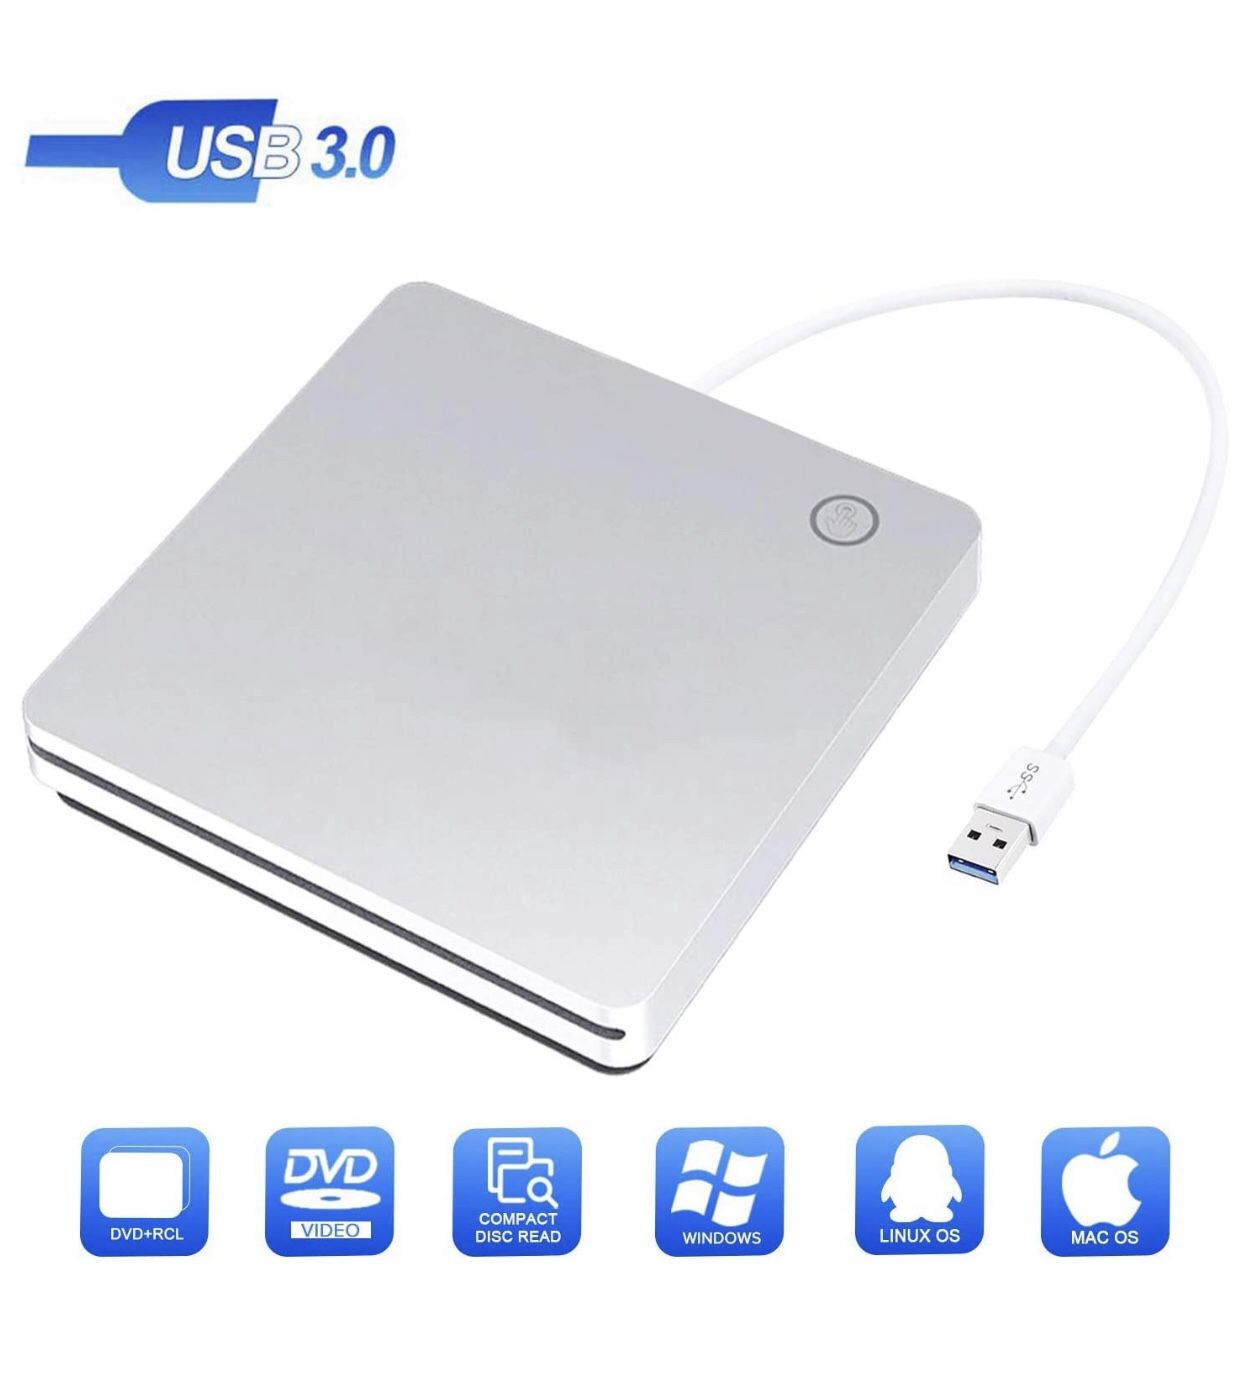 USB 3.0 External DVD CD Drive Writer/Rewriter/USB CD Burner for MacBook Pro Laptop/Desktops/Win 7/8.1/10 (Silver)